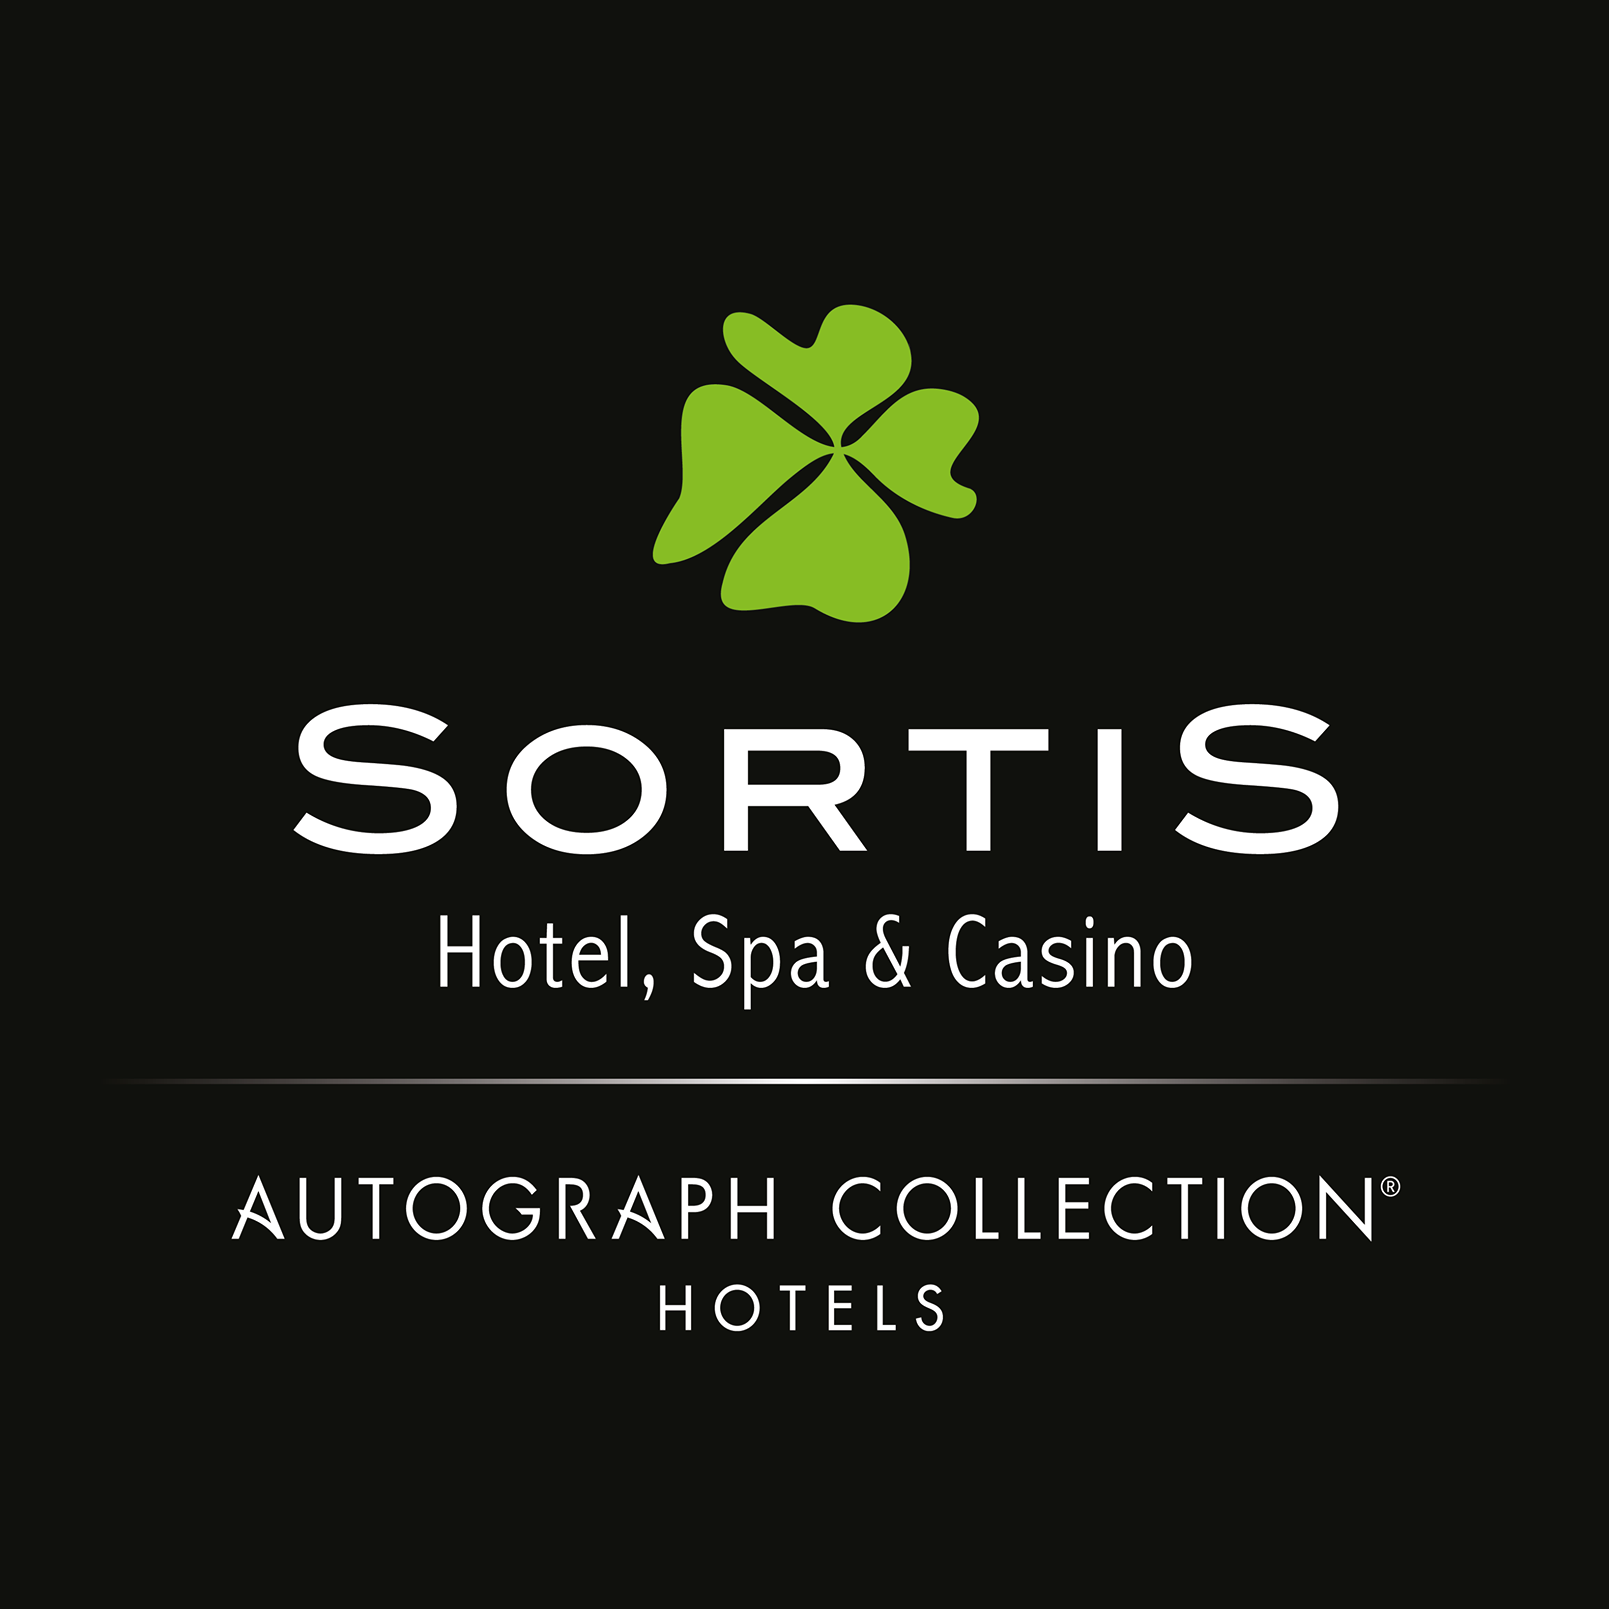 Sortis Hotel